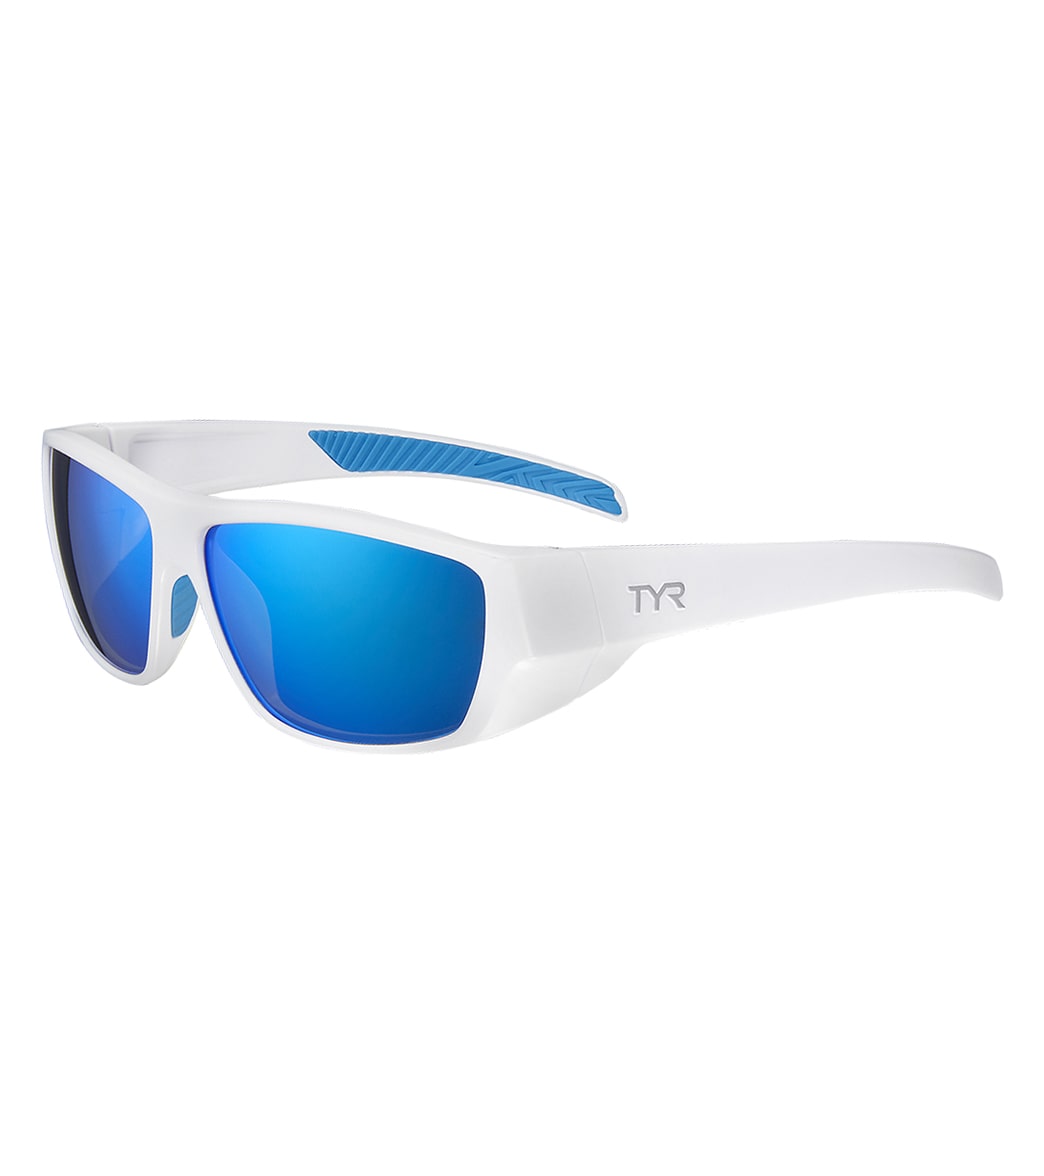 TYR Men's Knox Wrap Sunglasses - Blue/White One Size - Swimoutlet.com